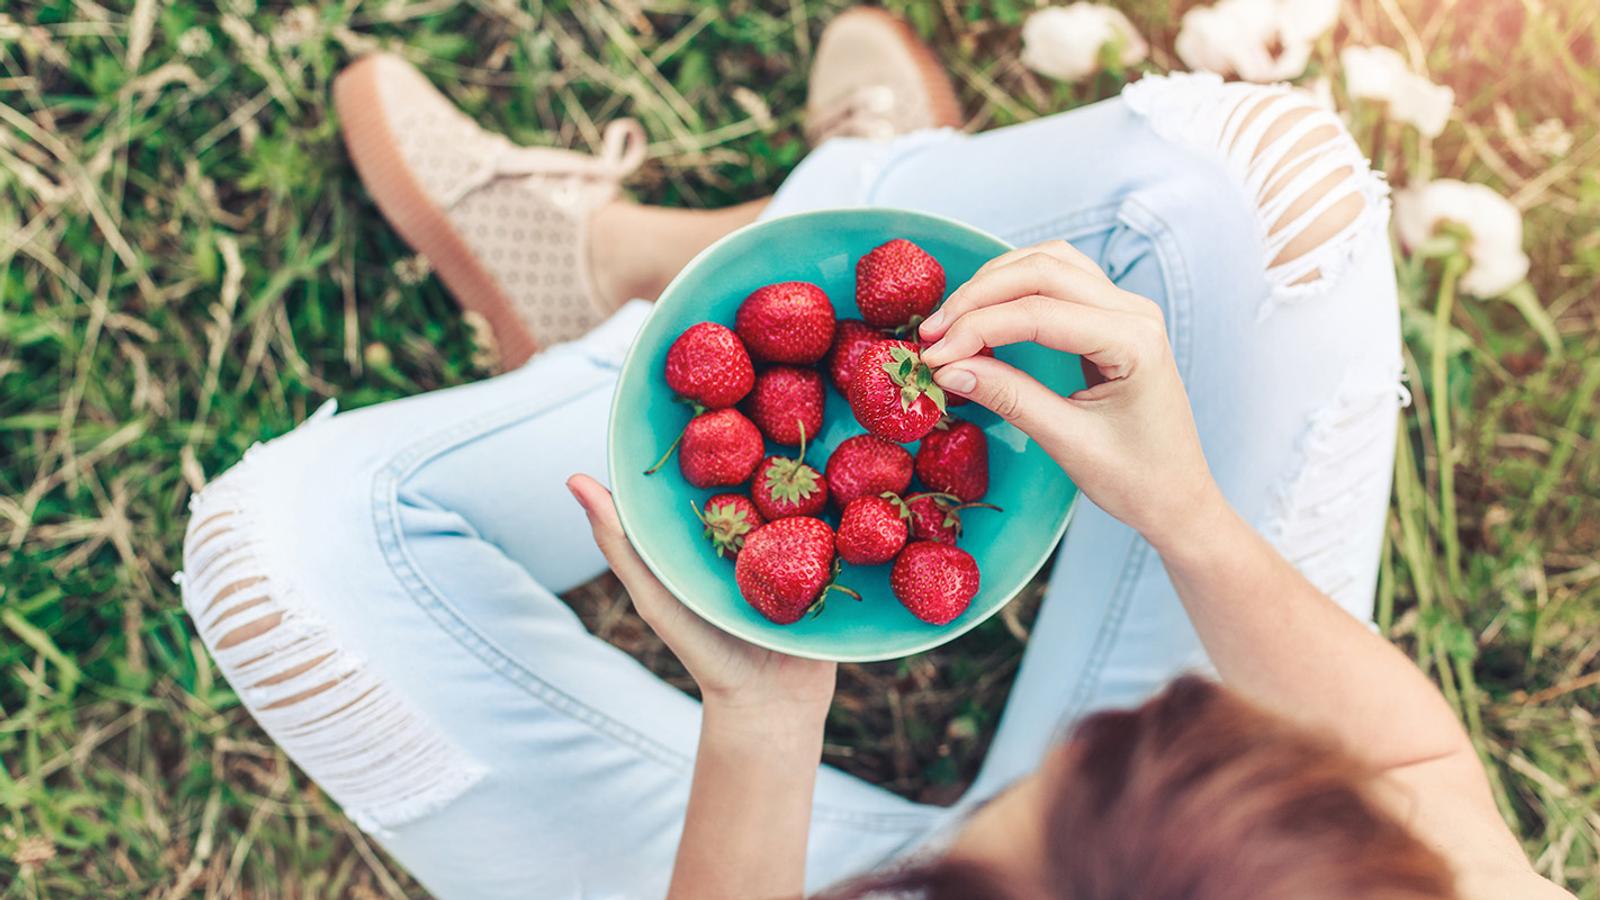 Erdbeeren können allergische Reaktion auslösen